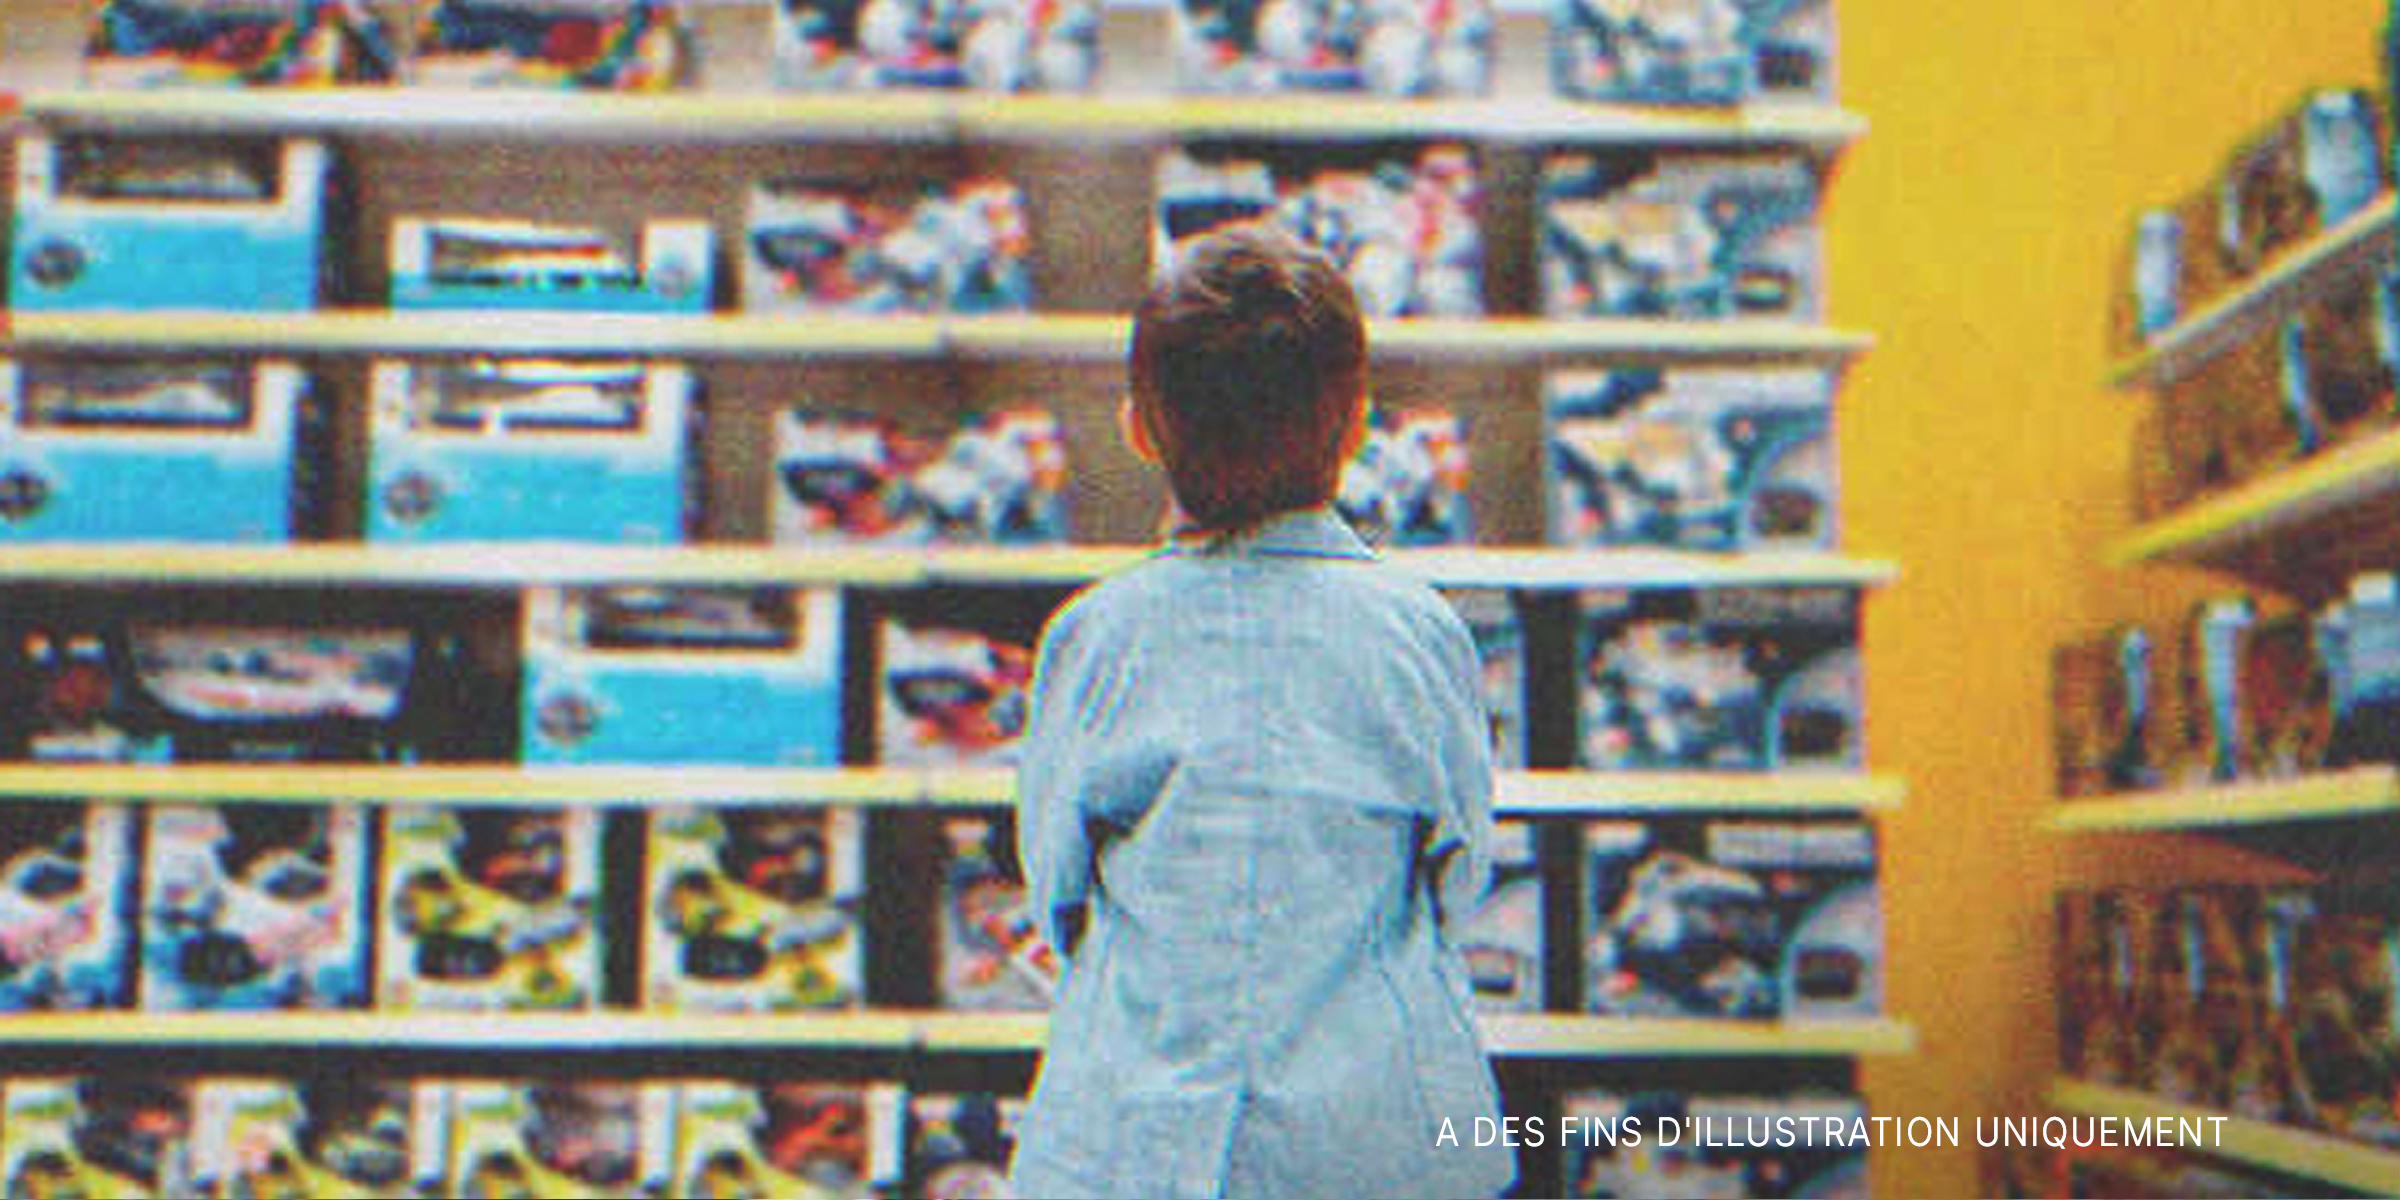 Un petit garçon dans un magasin de jouet | Source : Shutterstock